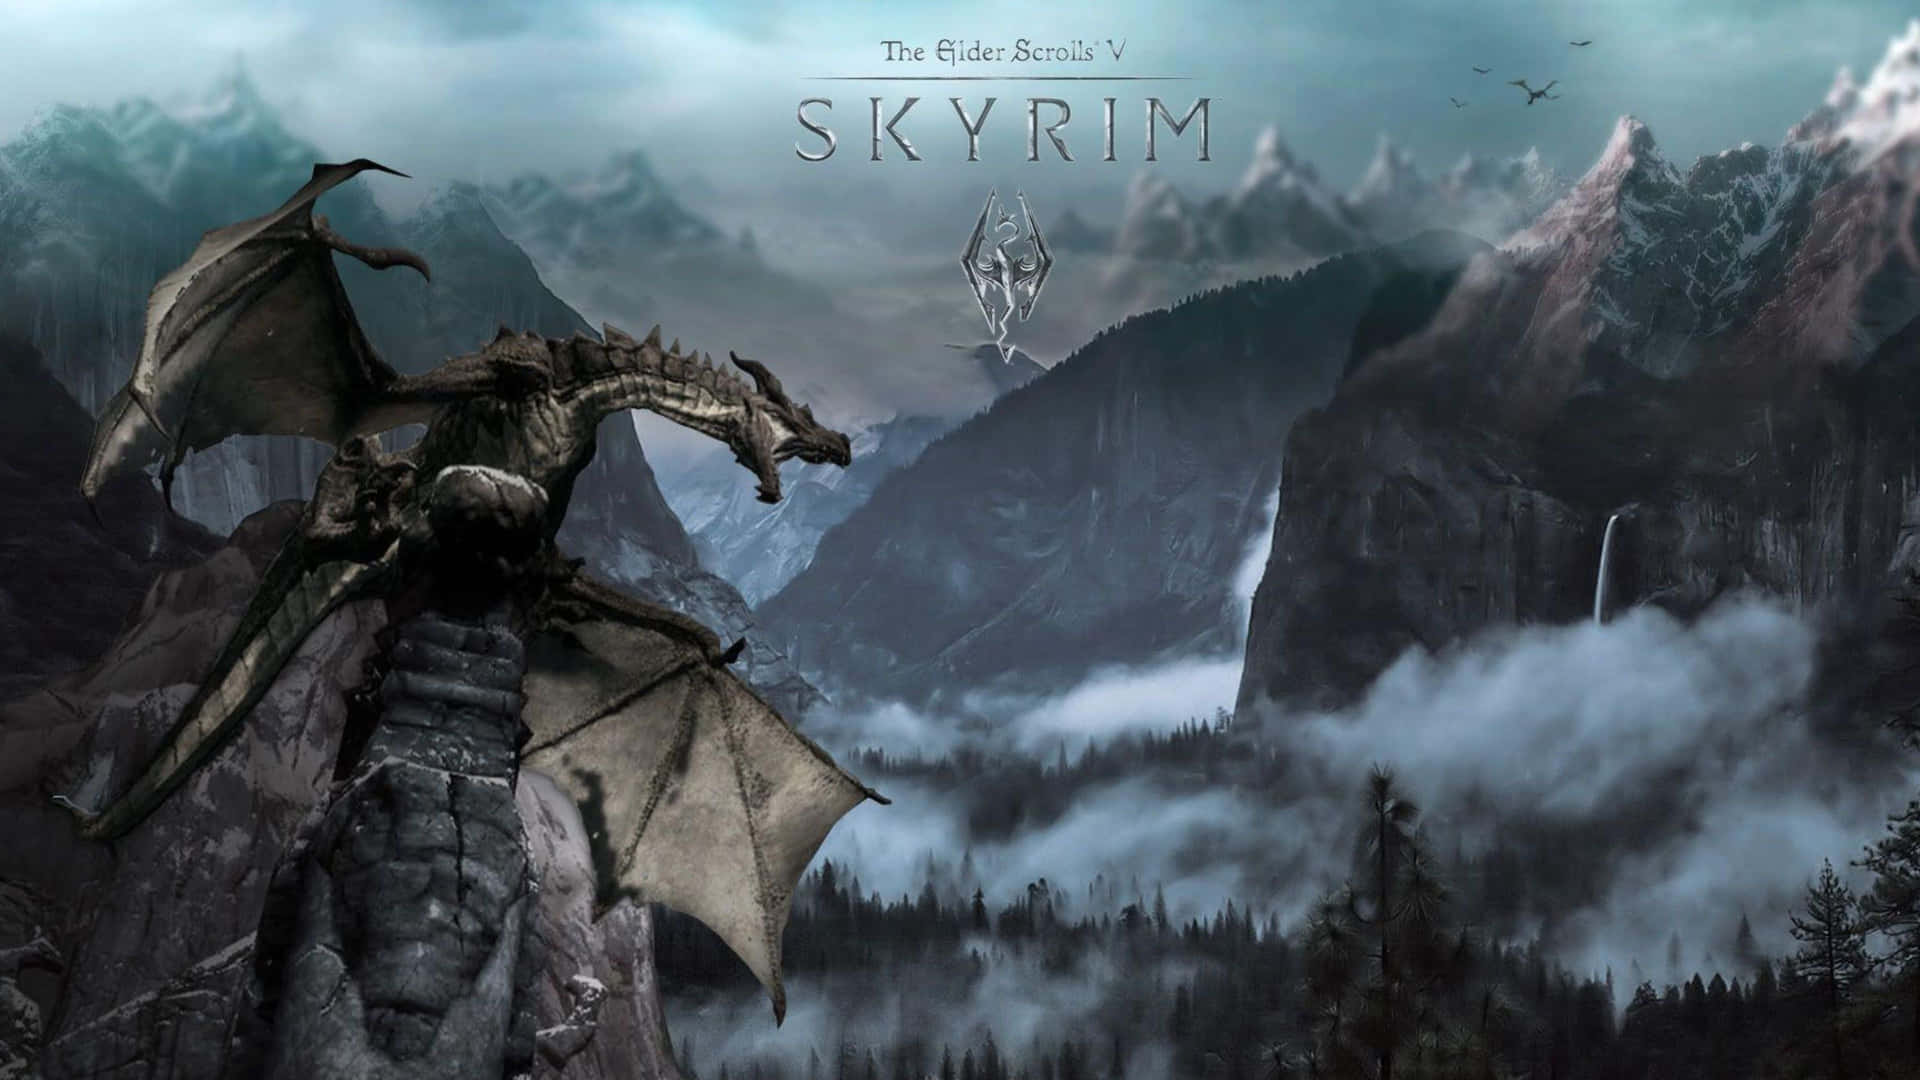 The Elder Scrolls V: Skyrim - Epic Adventure Awaits